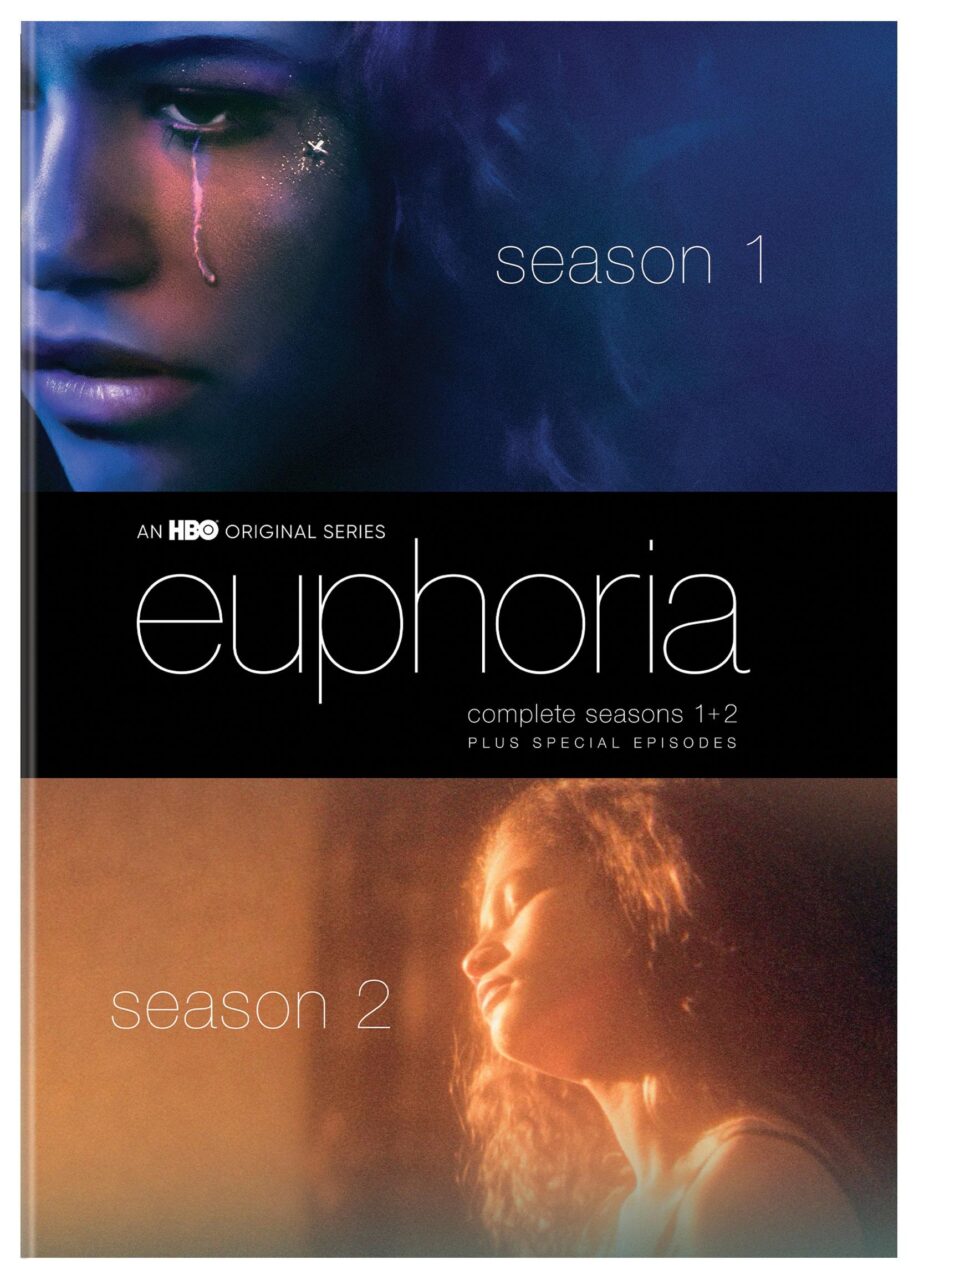 Euphoria Season 1 and 2 DVD cover (Warner Bros. Home Entertainment)